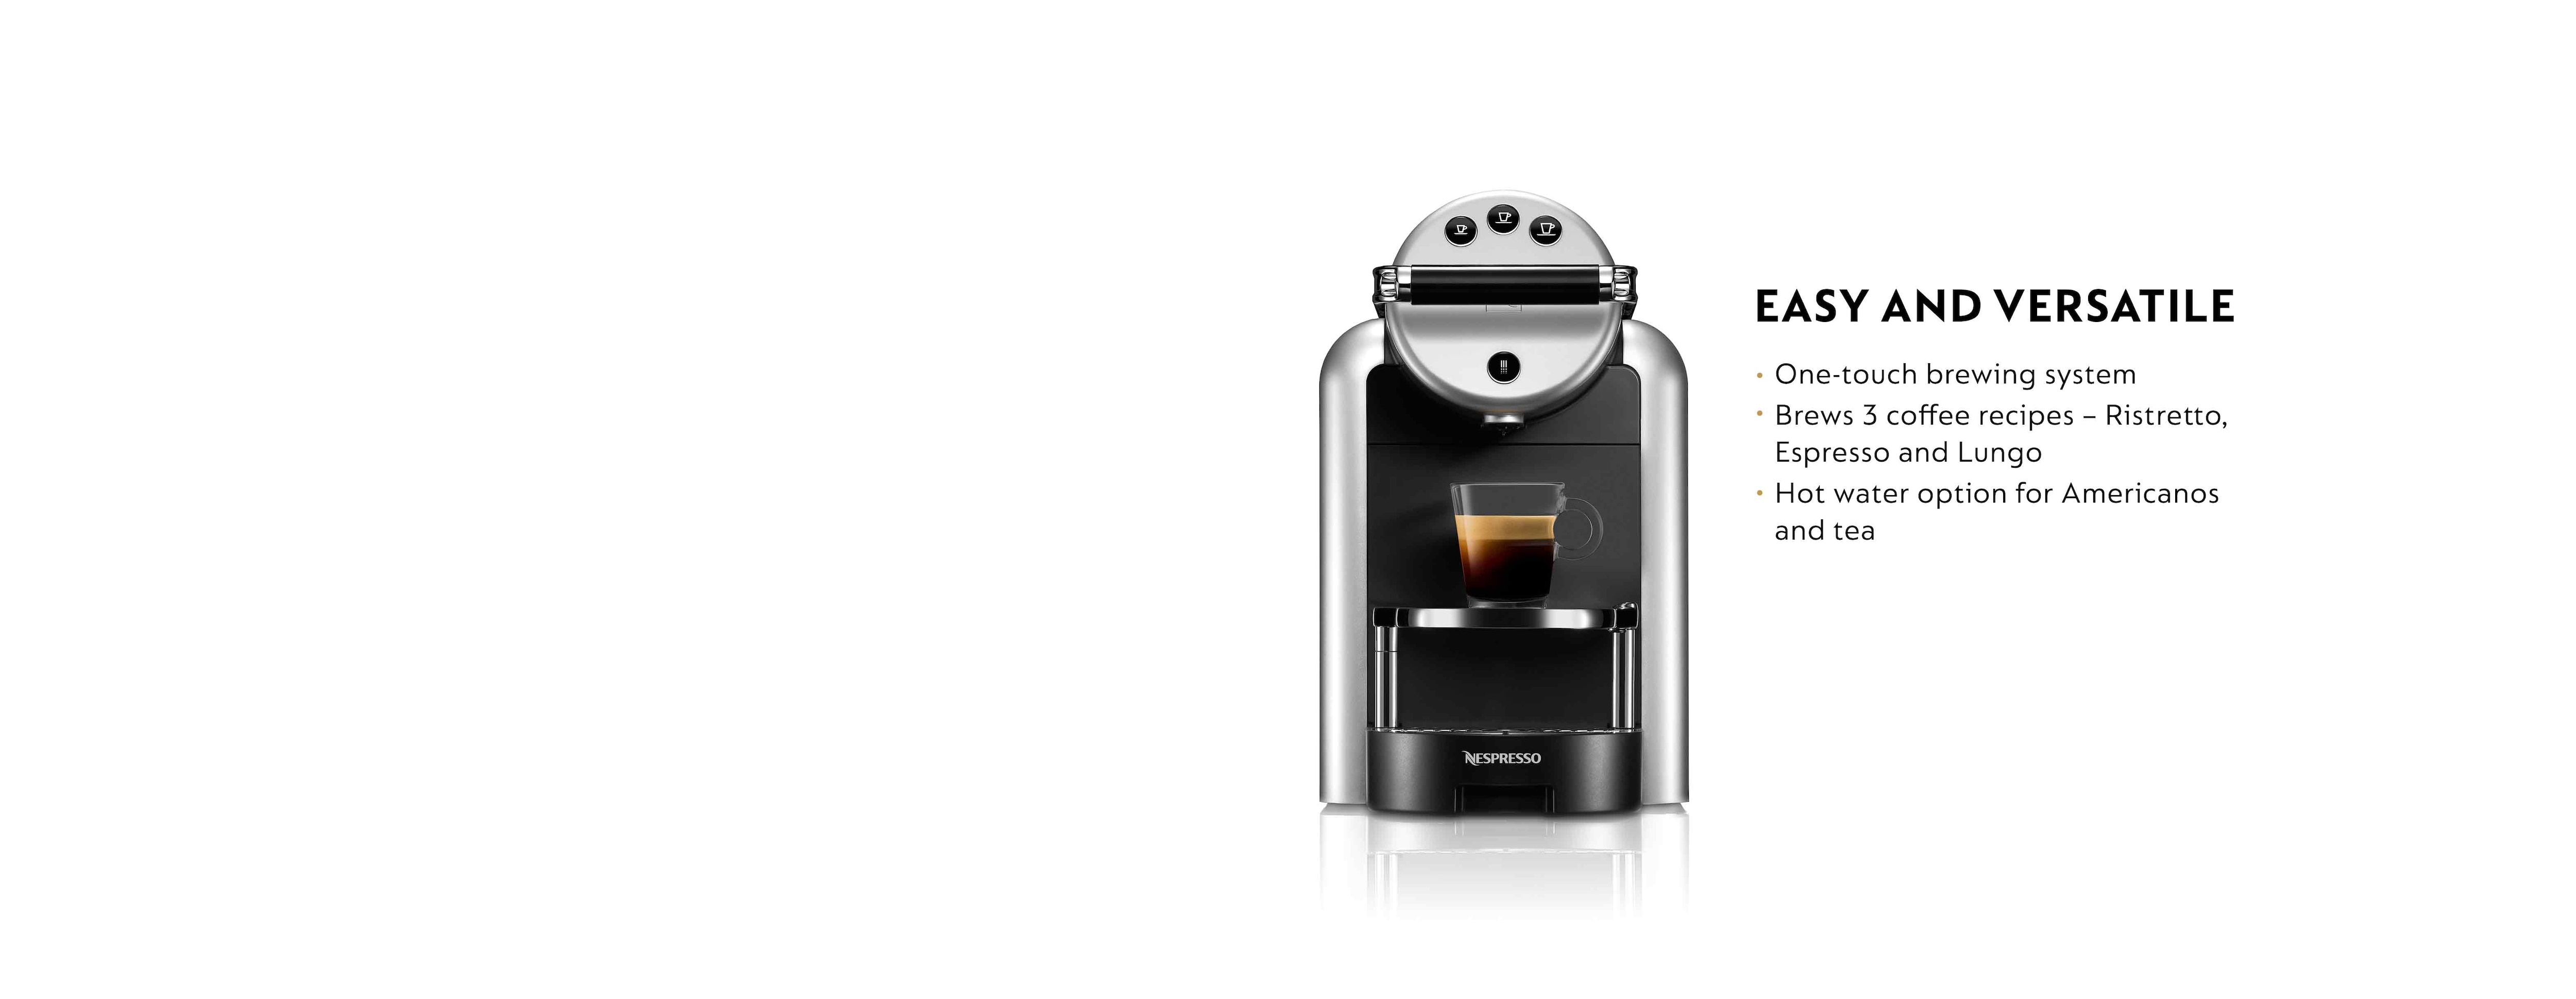 Zenius Coffee Essentials